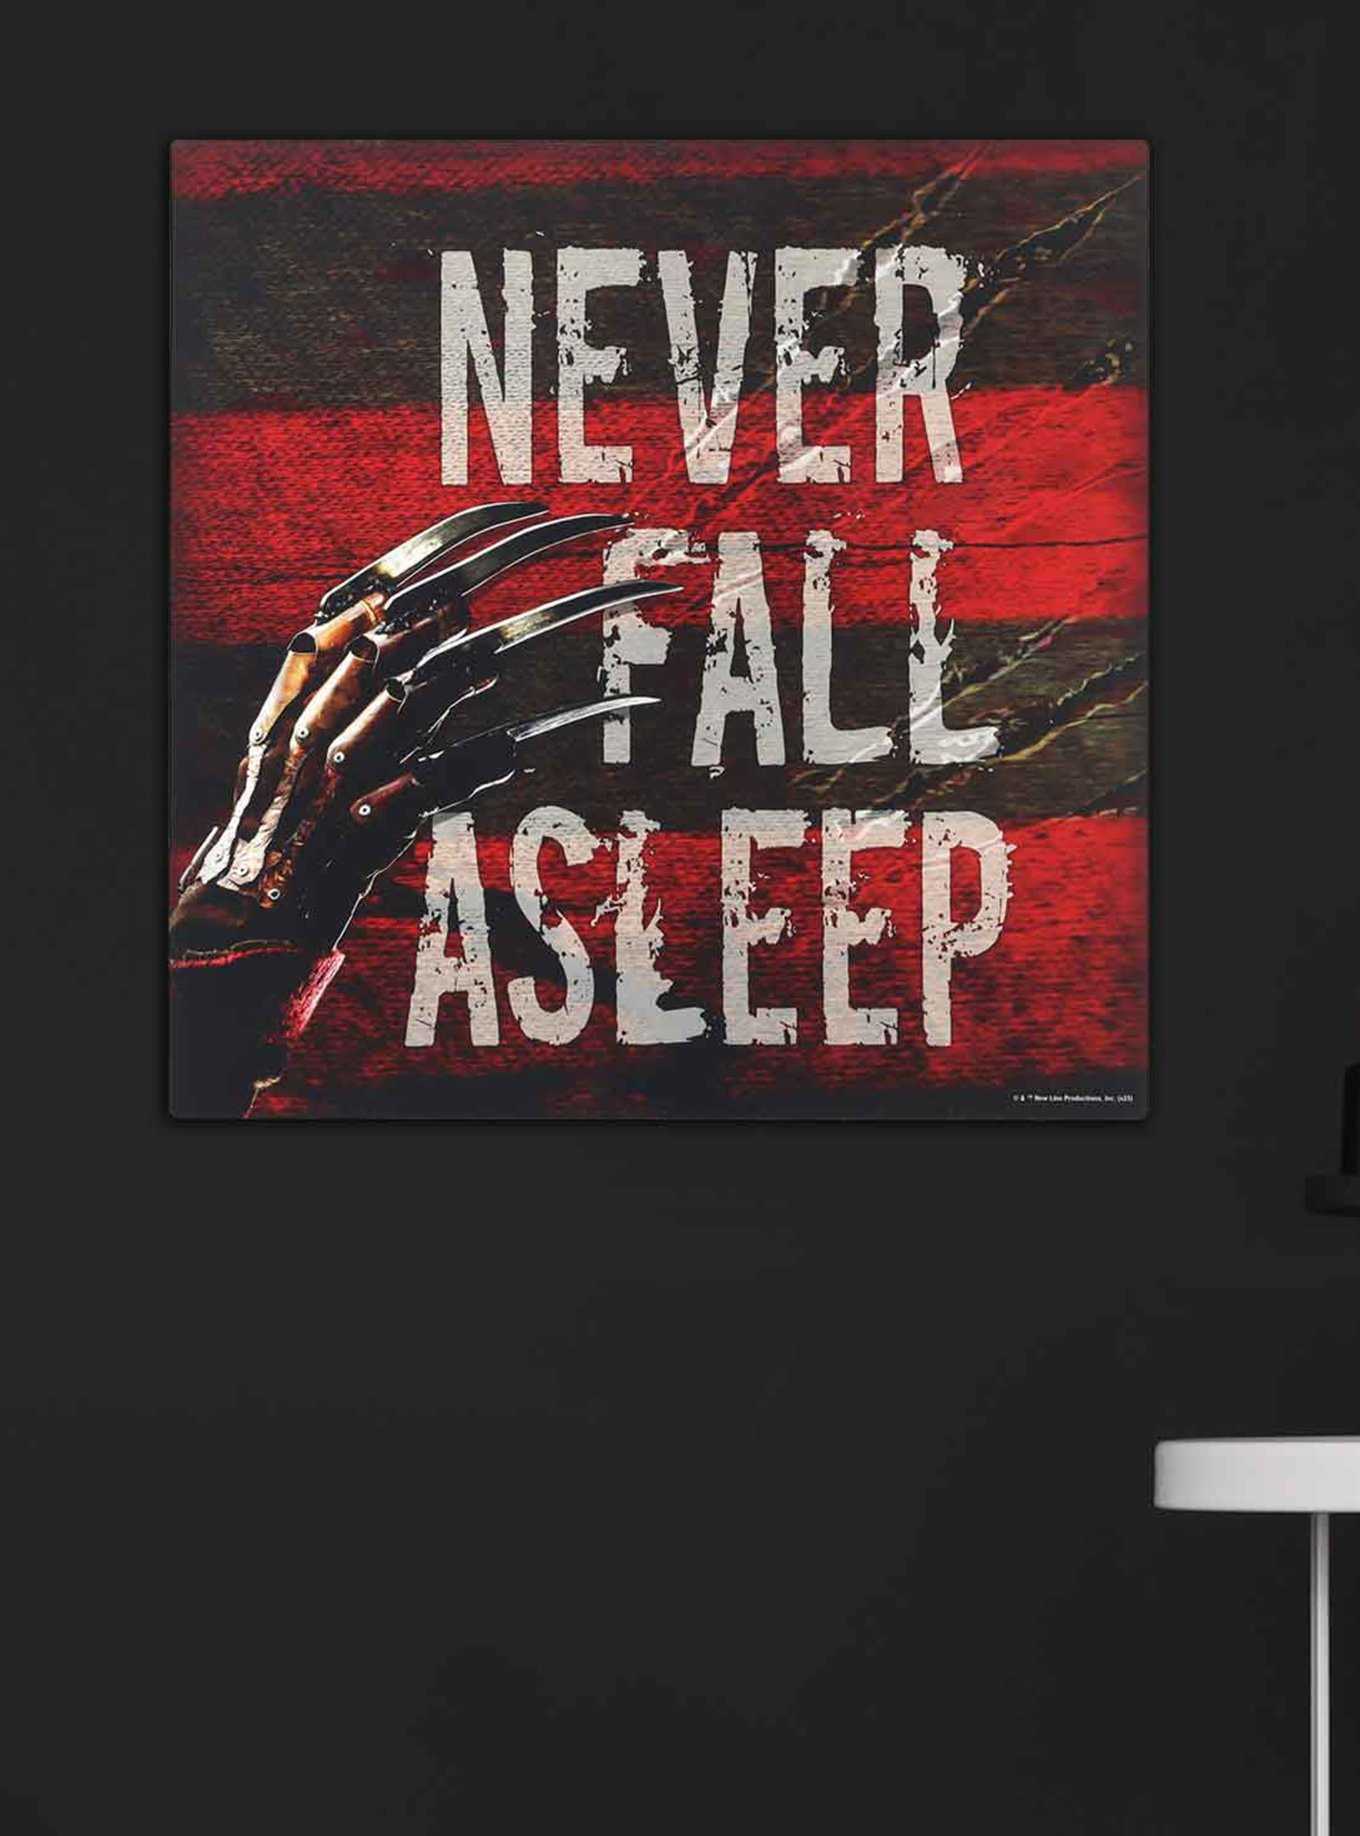 A Nightmare on Elm Street Never Fall Asleep Wood Wall Decor, , hi-res